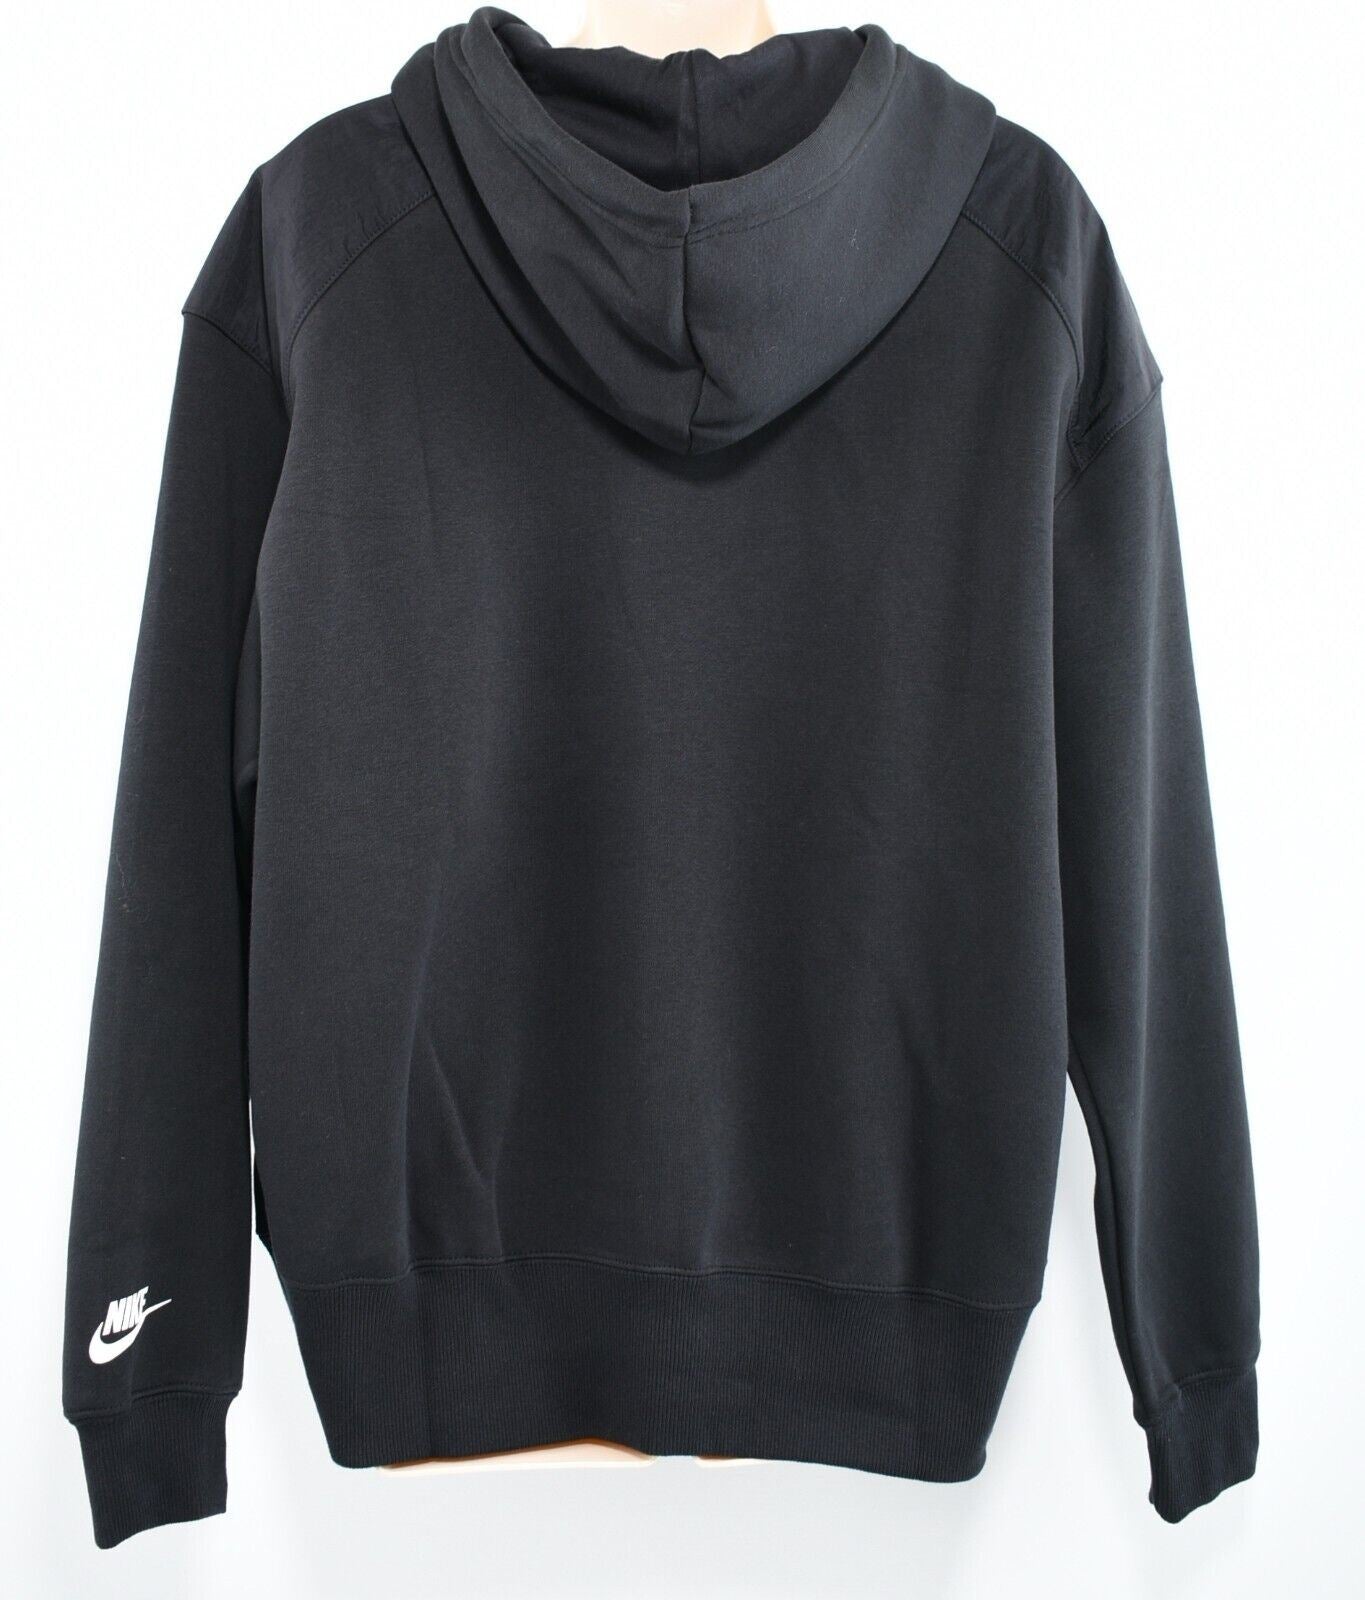 NIKE Women's Oversized Pullover Hoodie Sweatshirt, Black, size S /UK 10